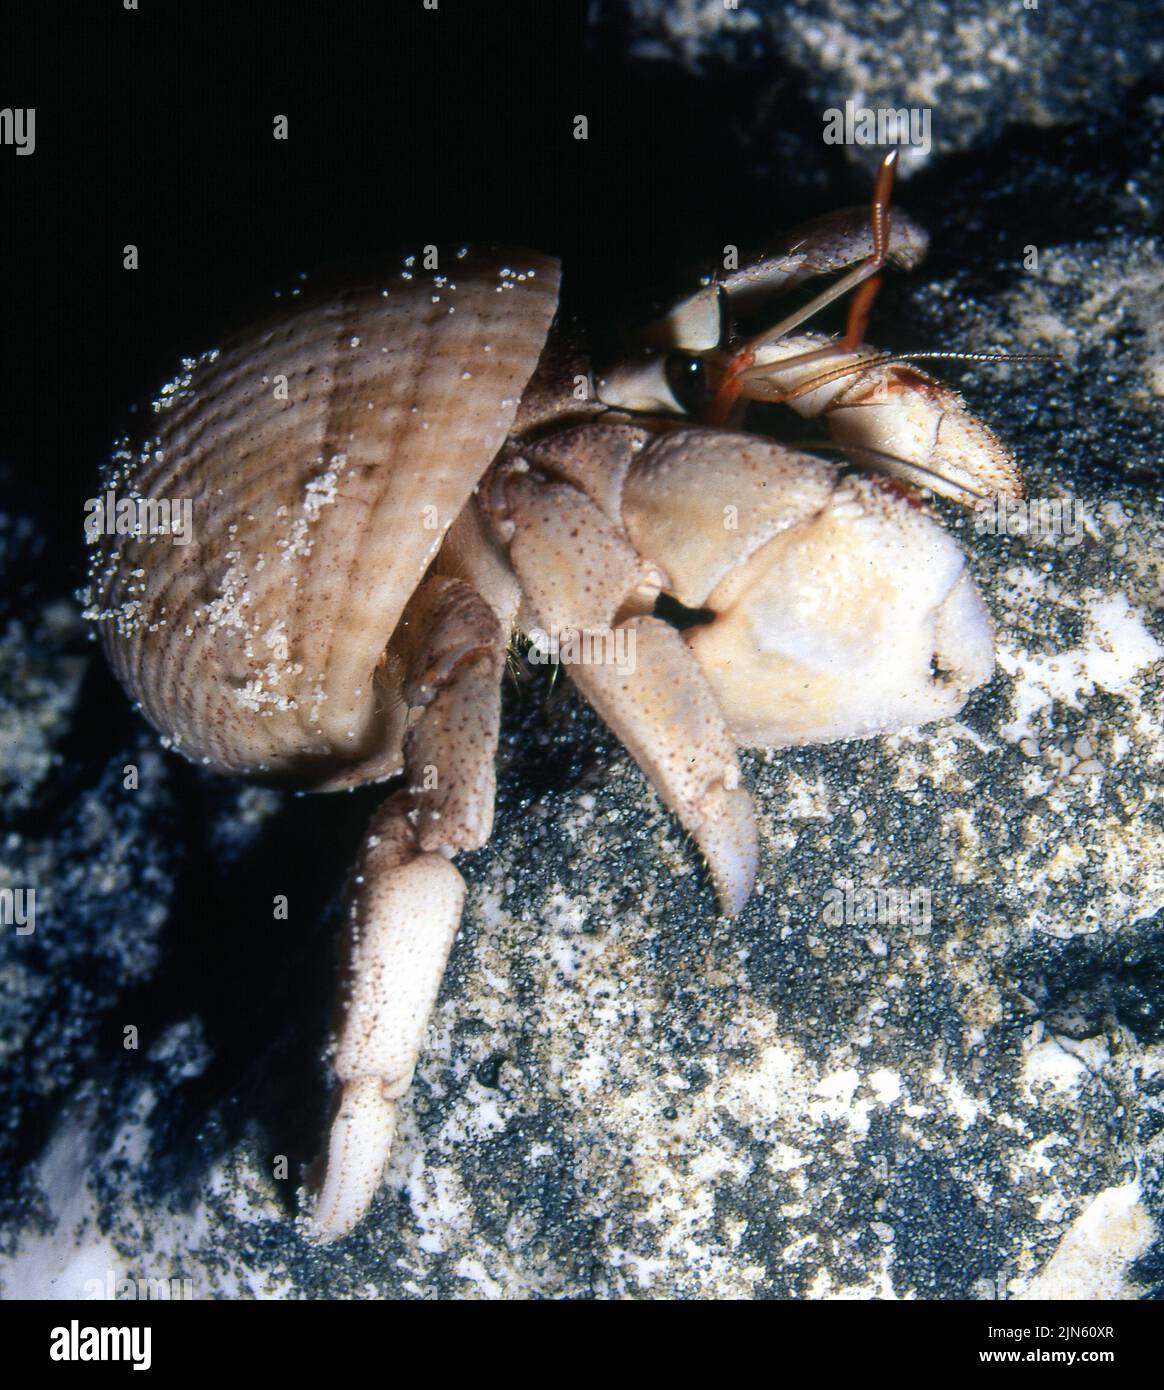 Terrestrial hermit crab (Coenobita sp., C. scaevola?) from the Maldives. Stock Photo